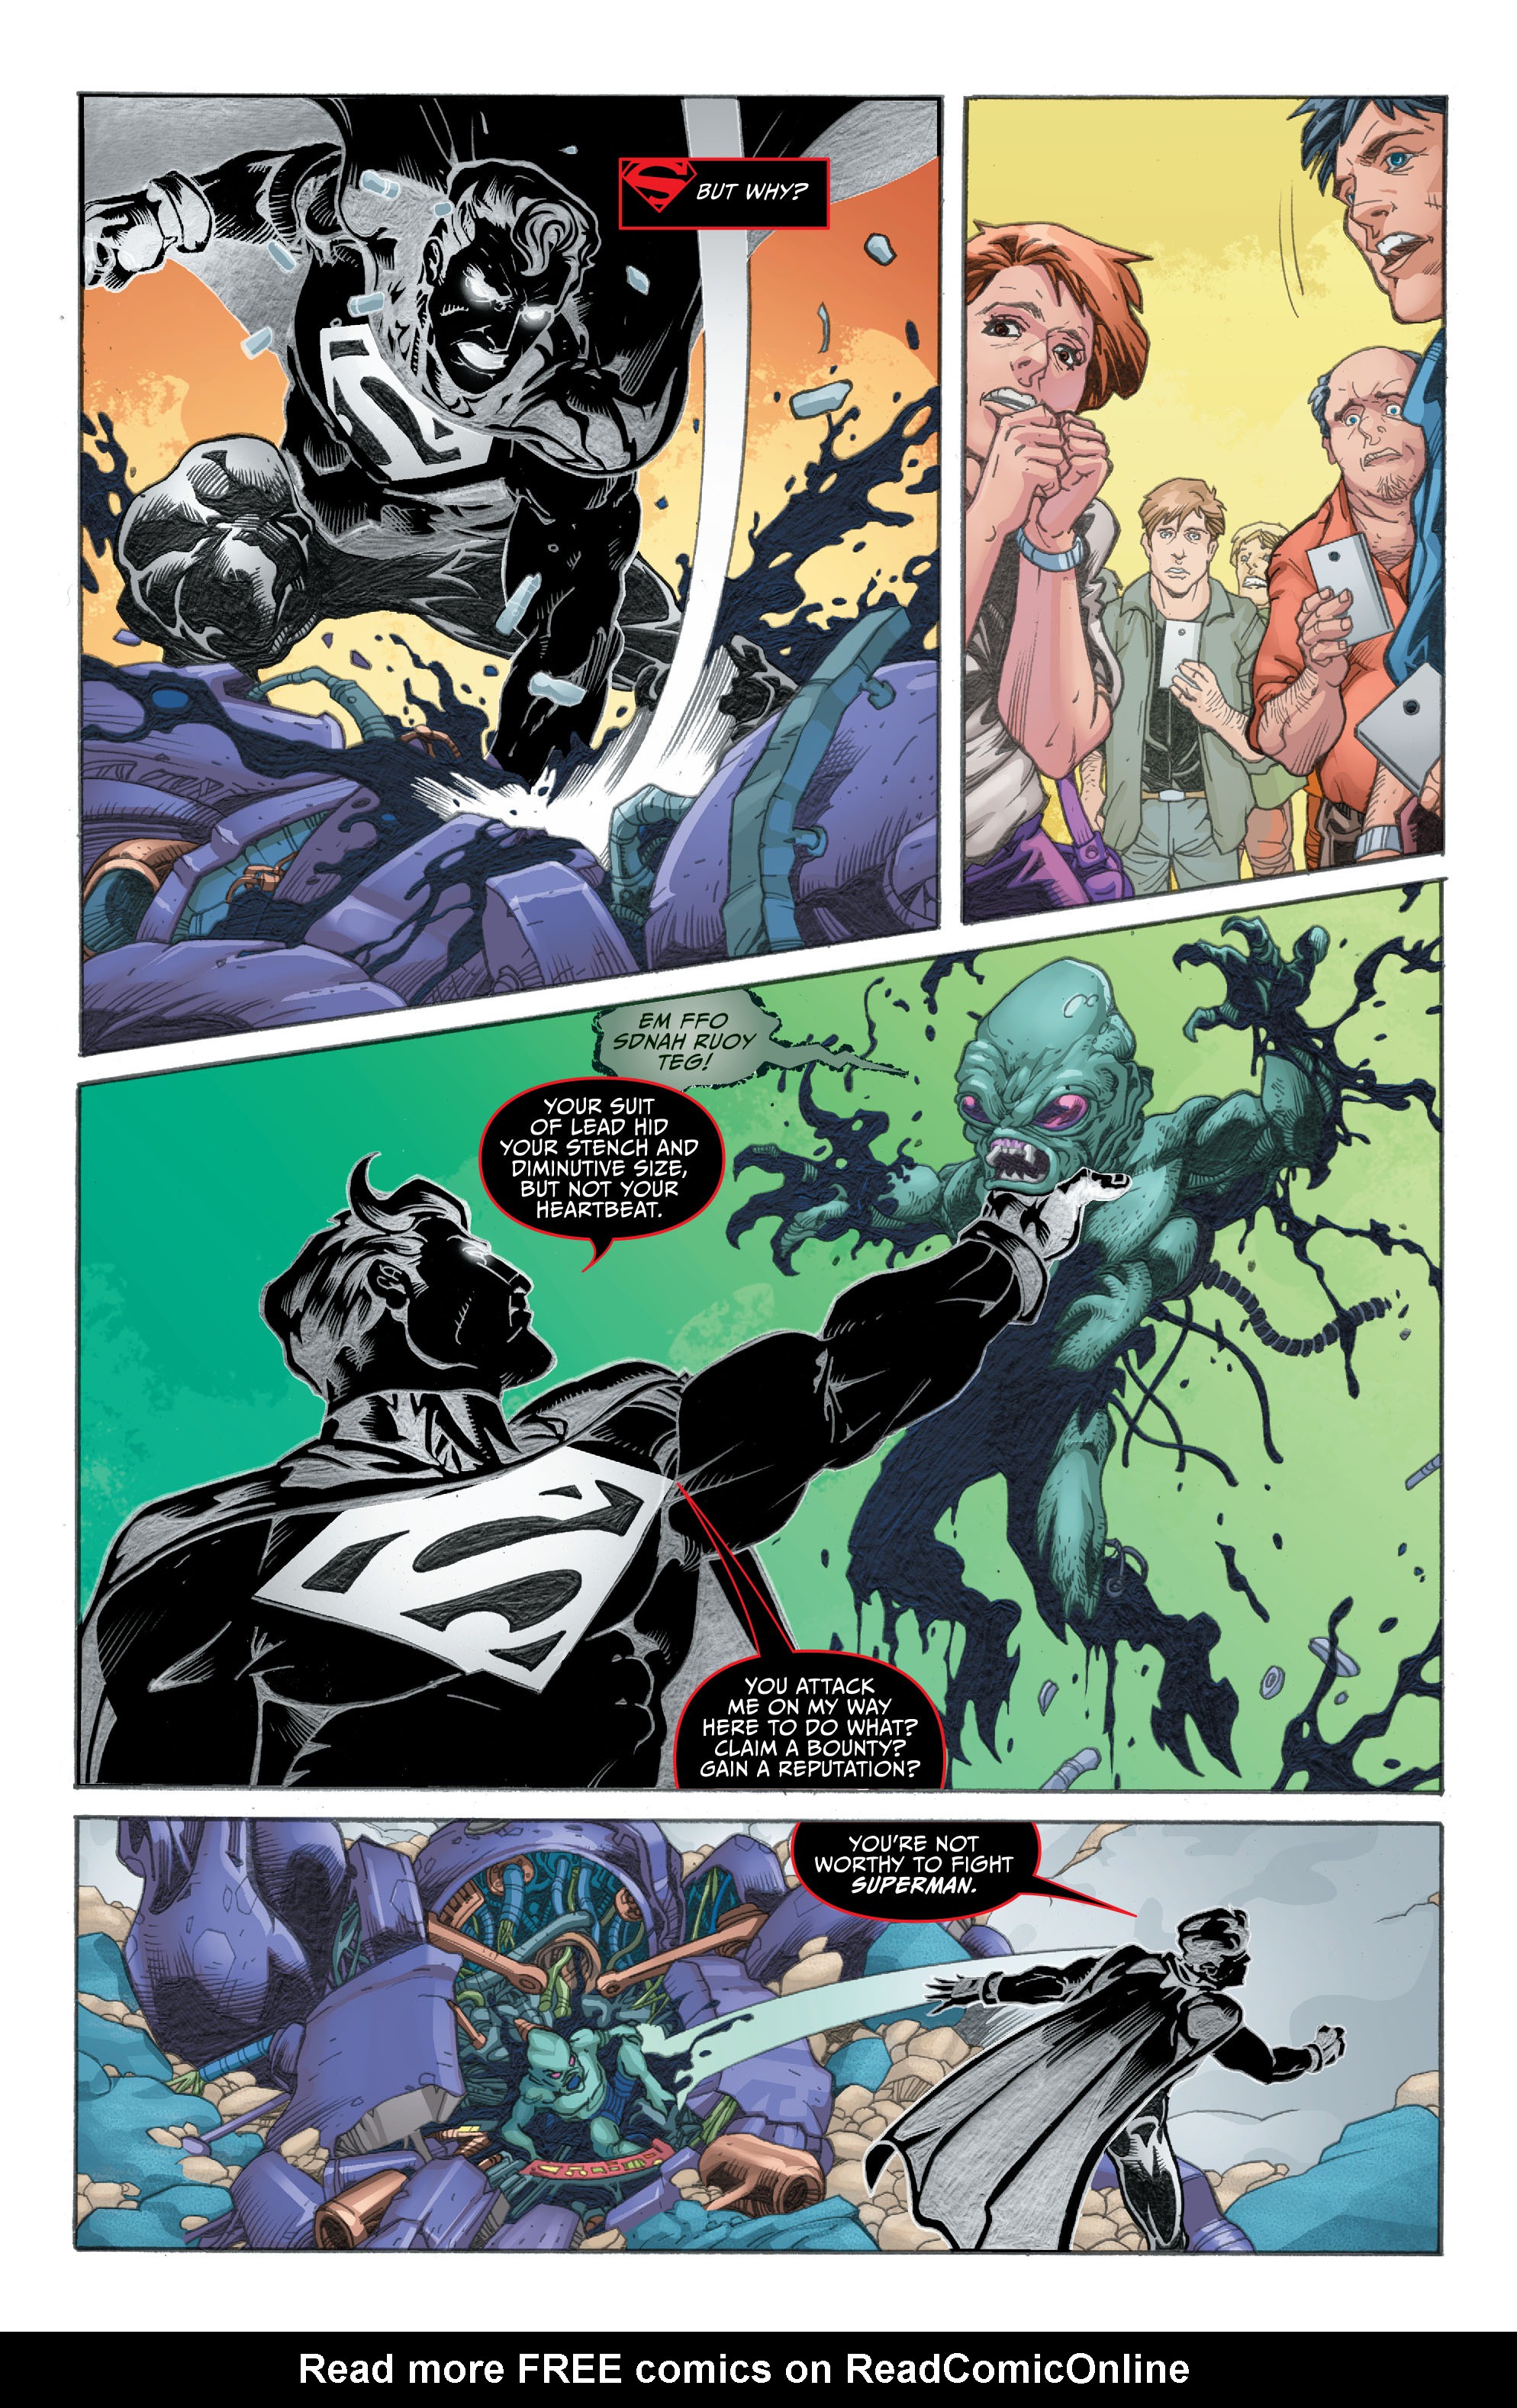 Justice League Darkseid War Superman Issue 1 Read